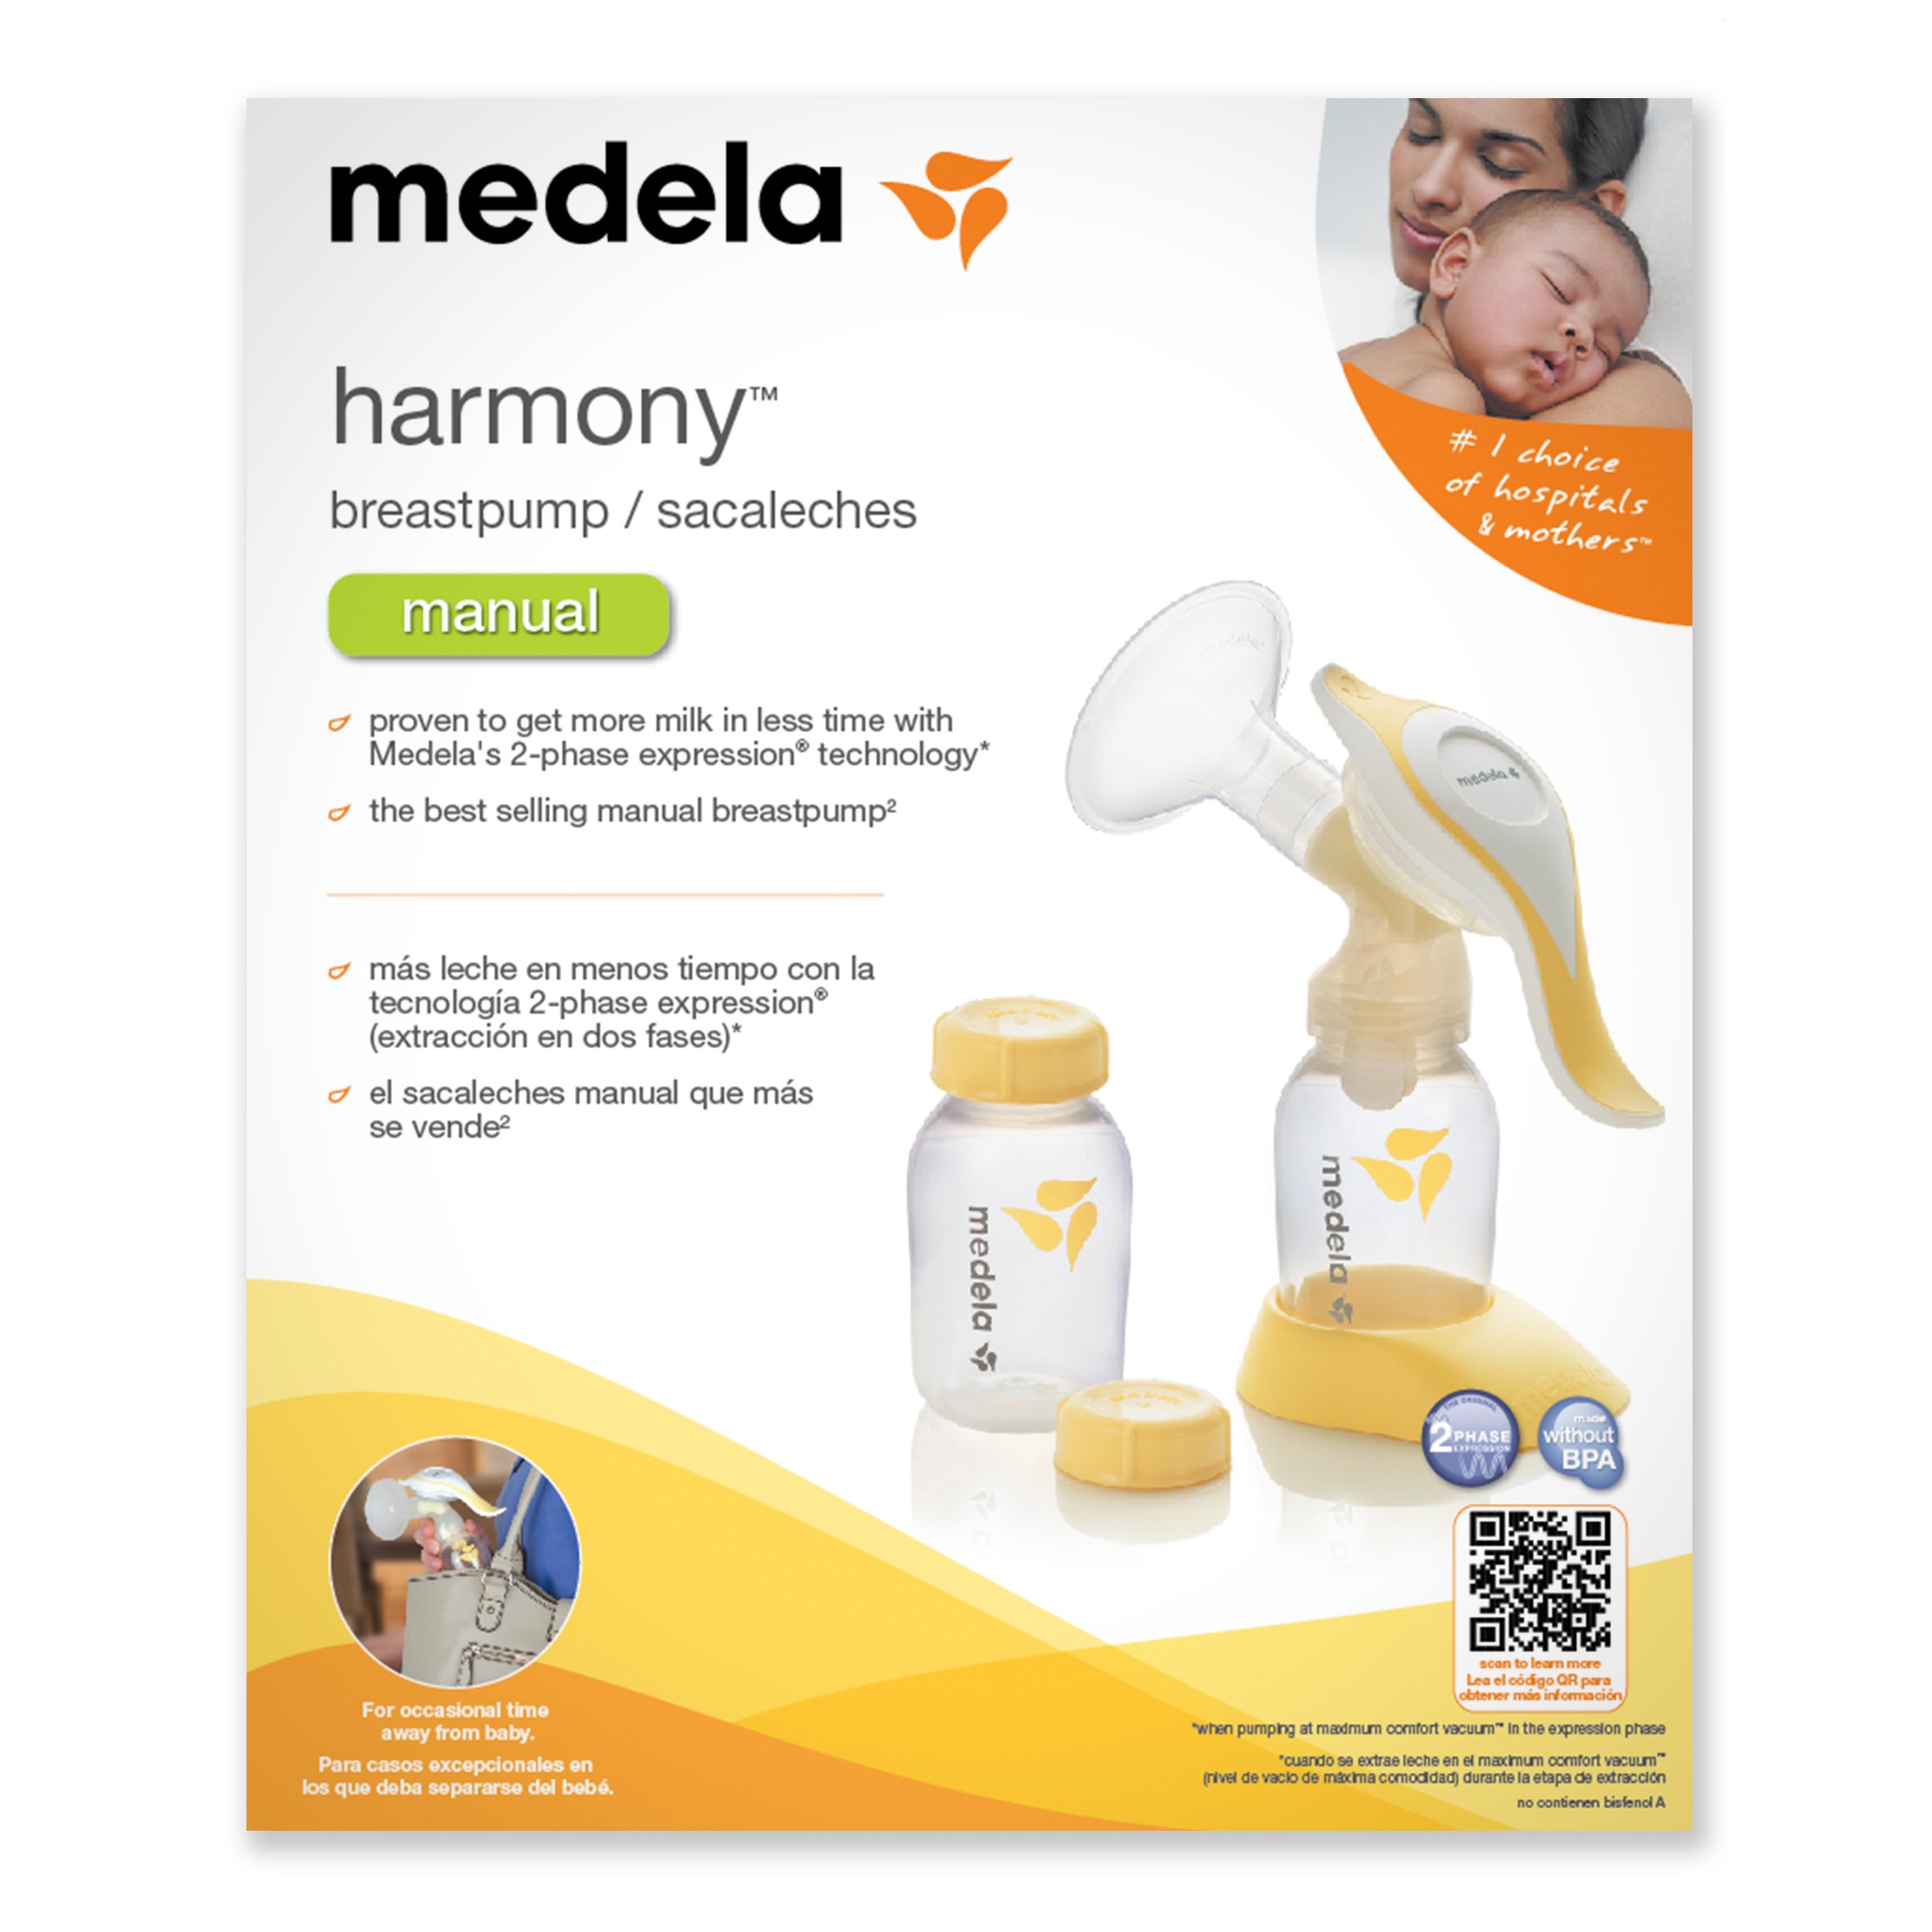 Medela Harmony Manual Breast Pump with Flex